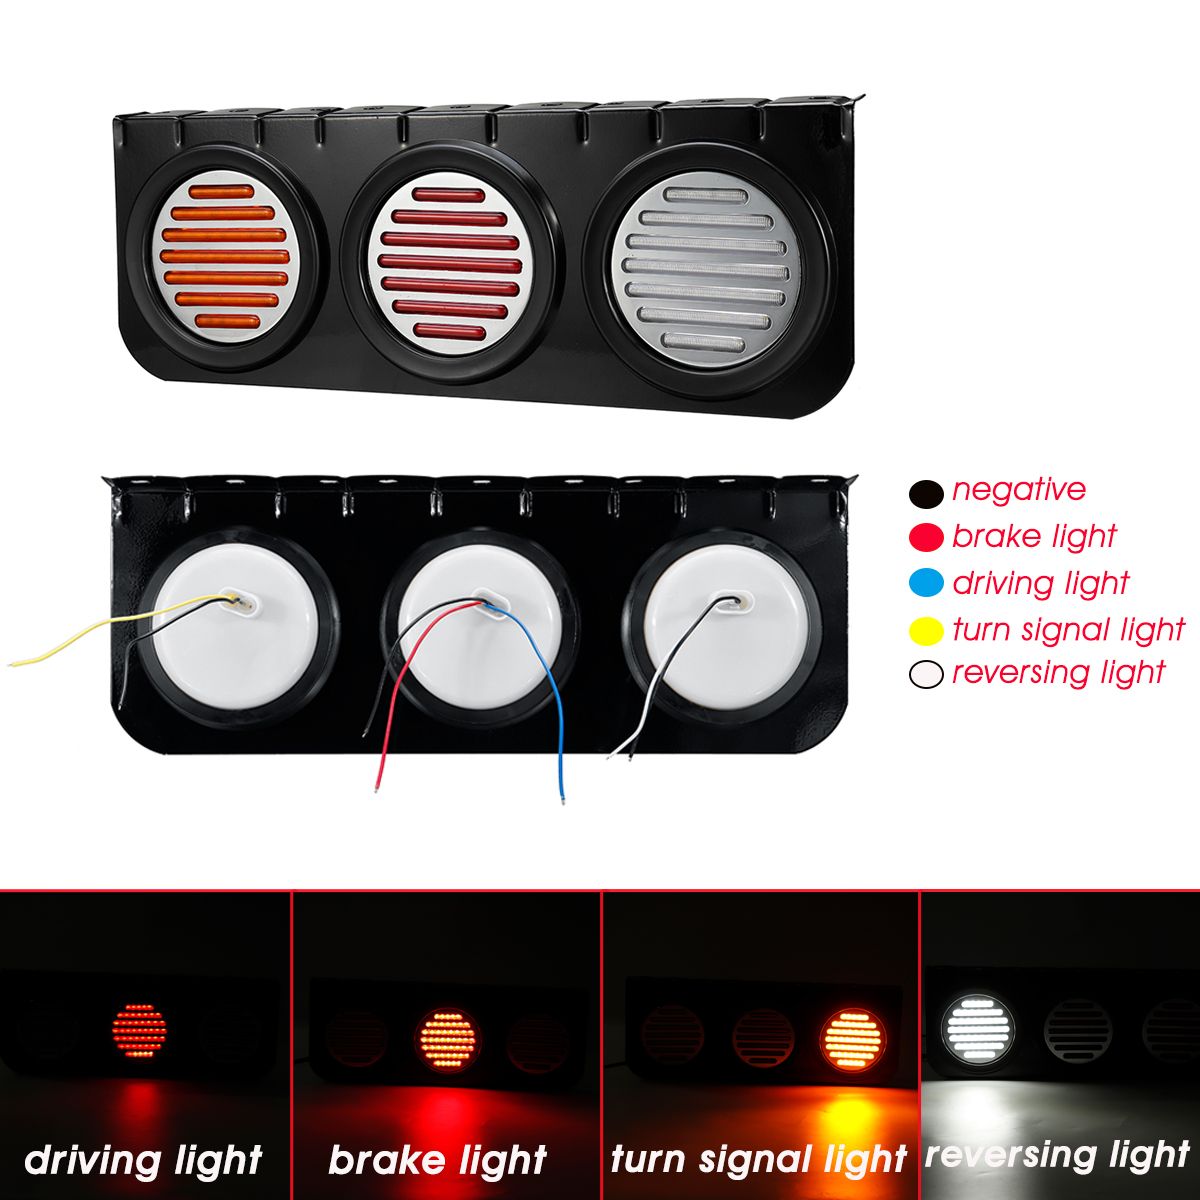 12V-Rear-Stop-LED-Tail-Lights-Brake-Turn-Signal-Lamp-Trailer-Truck-Car-Universal-1613308